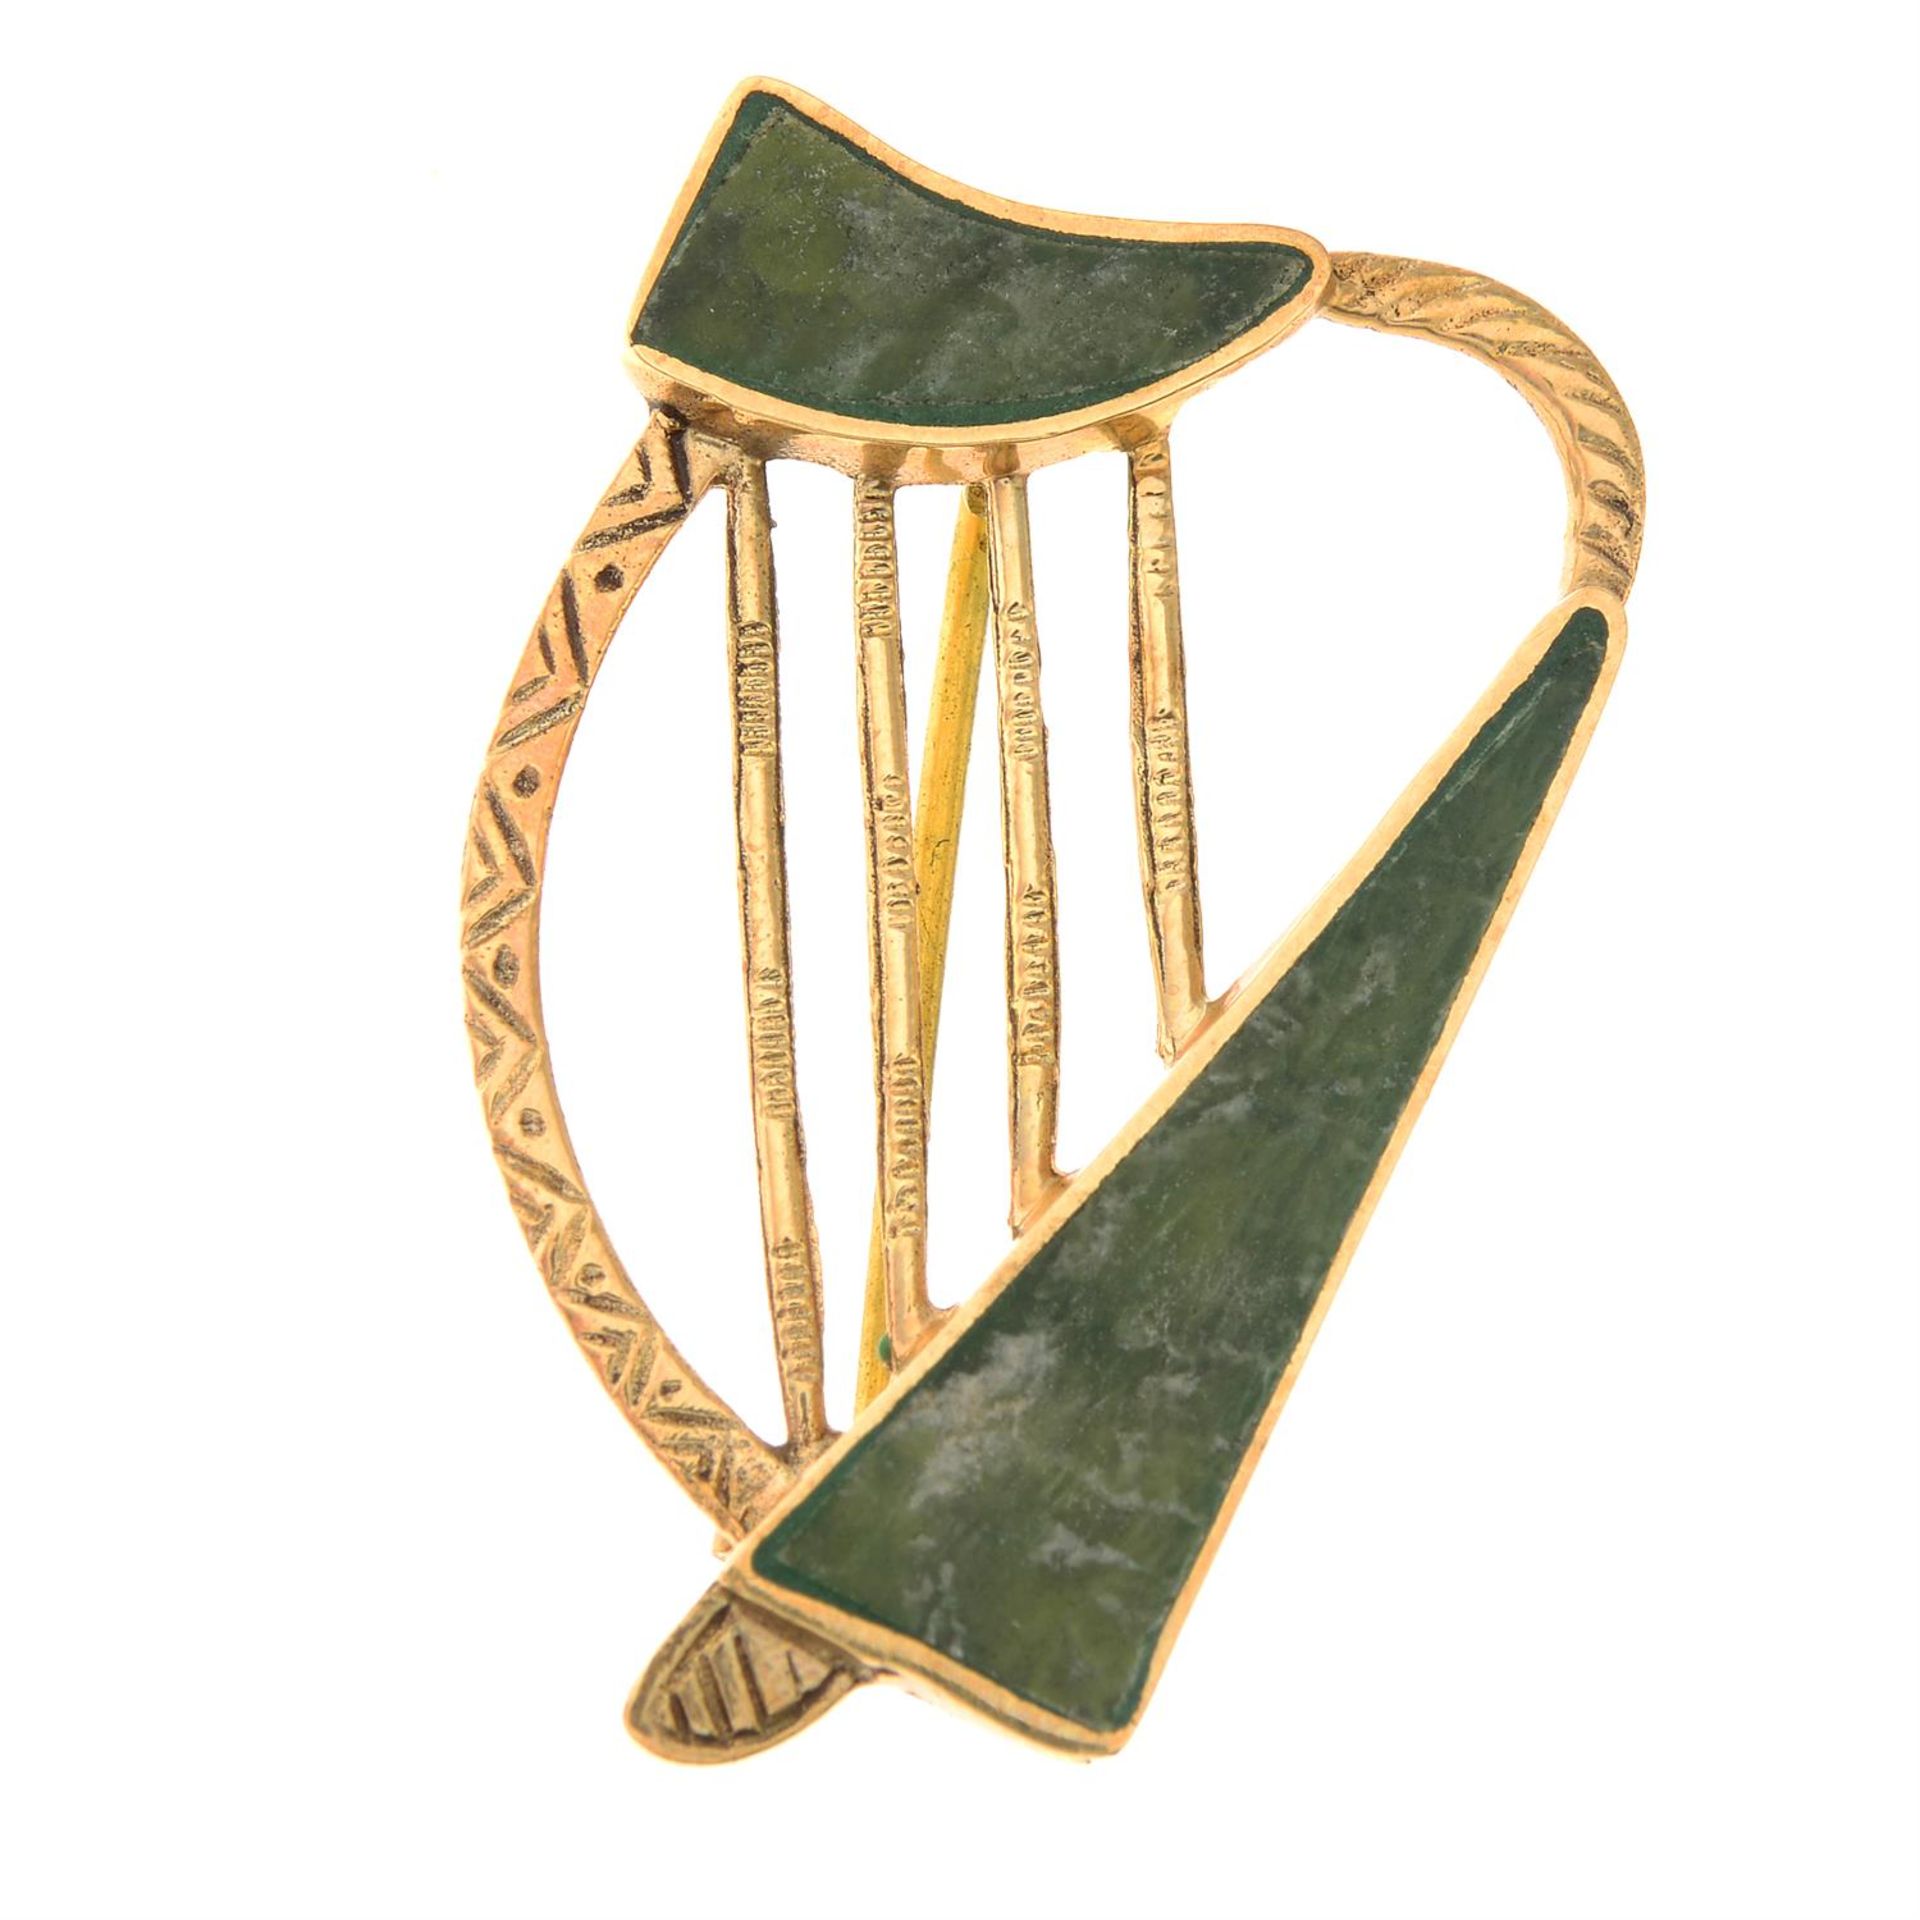 A mid 20th century 9ct gold connemara marble harp brooch.